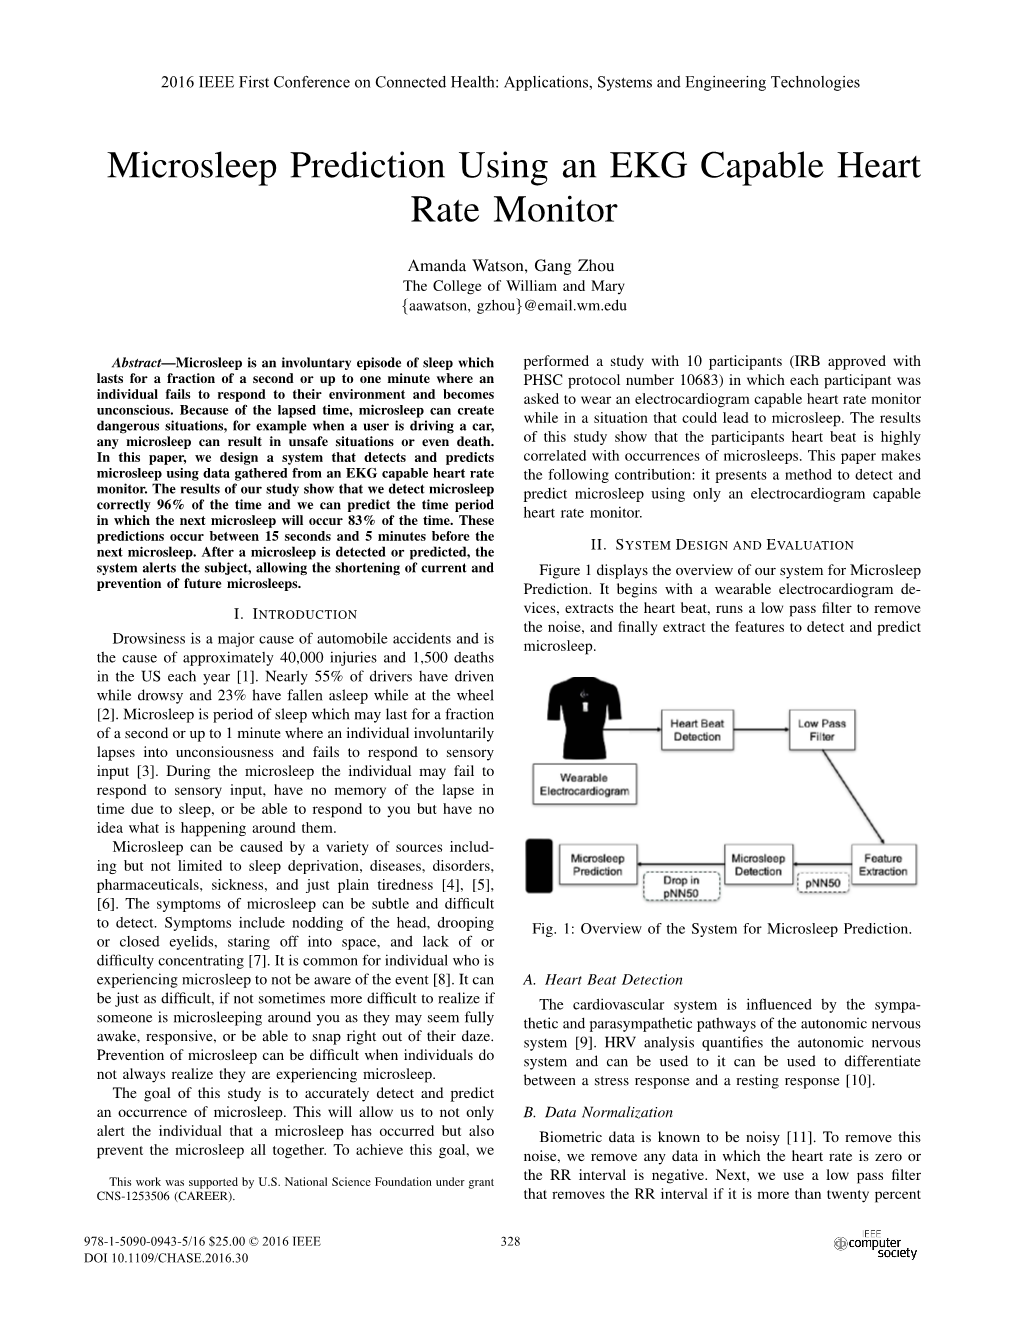 Microsleep Prediction Using an EKG Capable Heart Rate Monitor